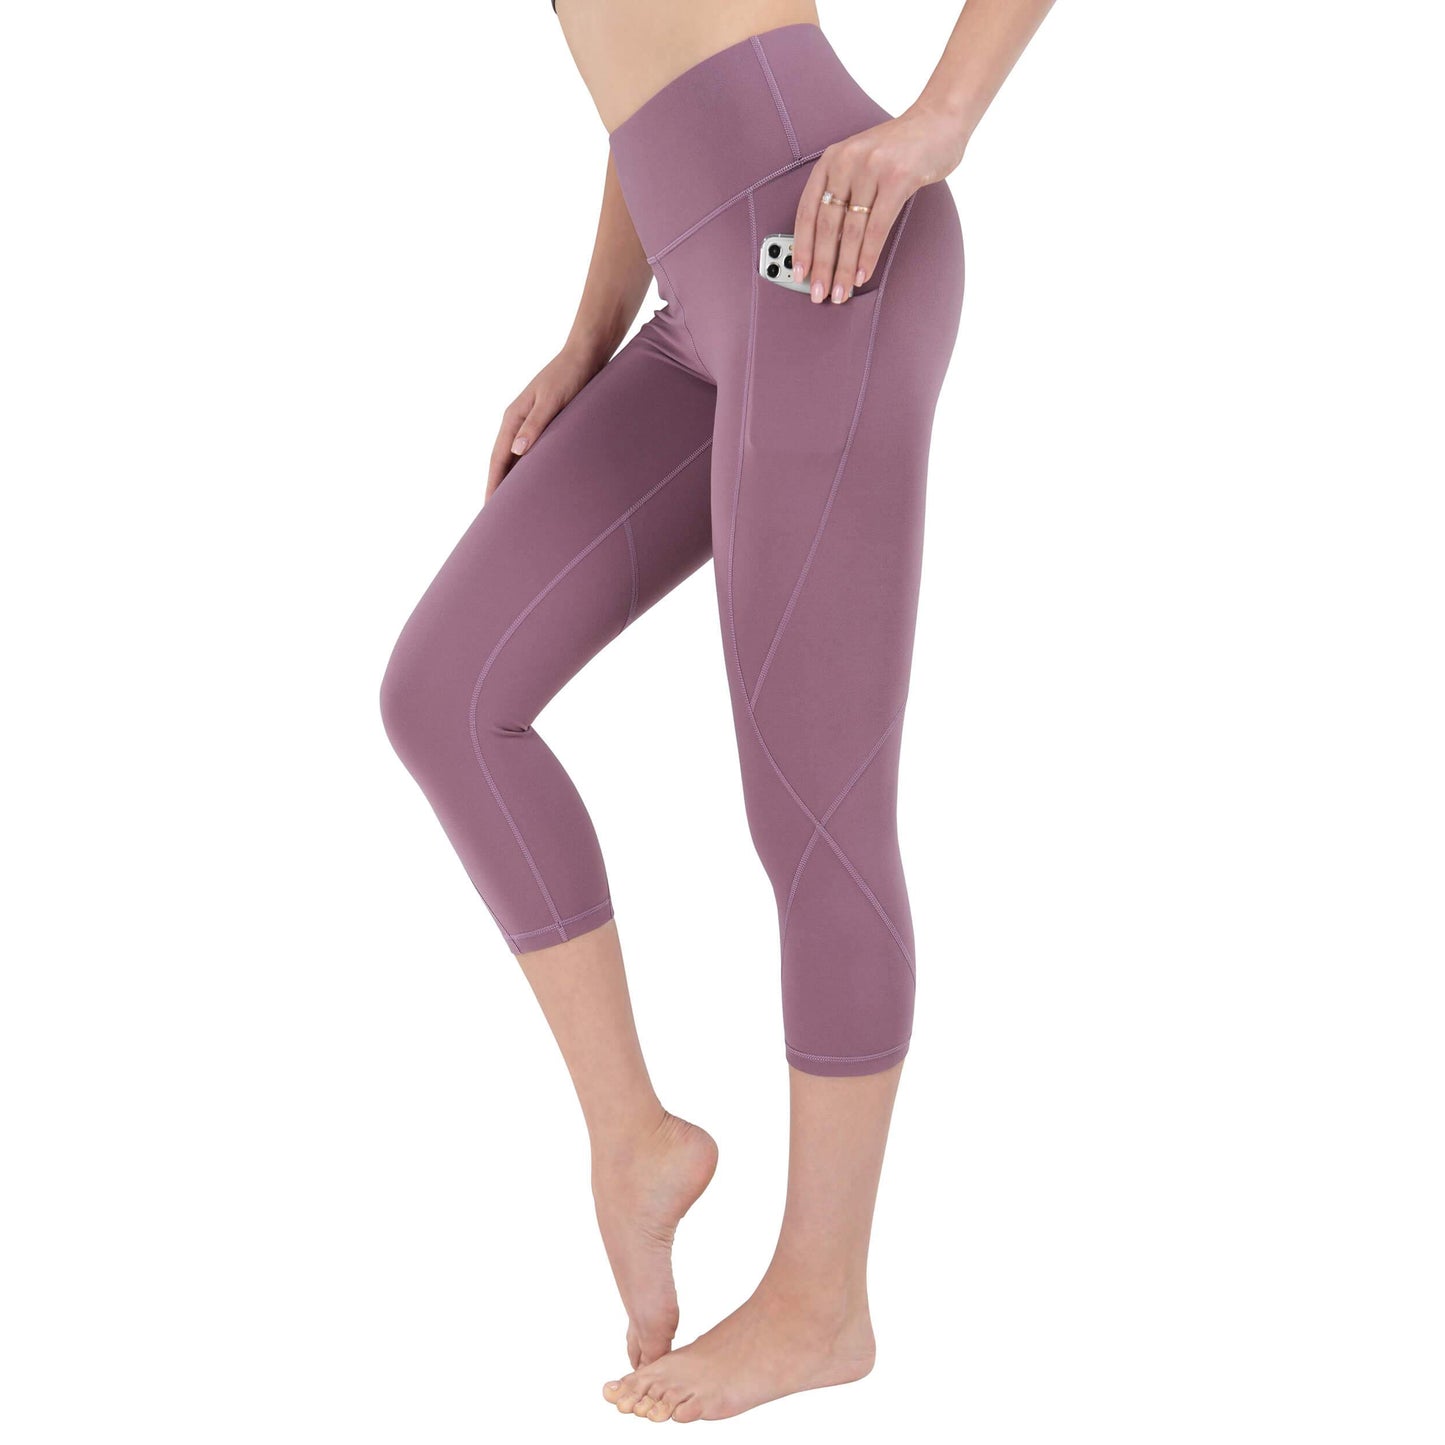 iKeep<sup>&reg;</sup> Women's Yoga Capris with pockets